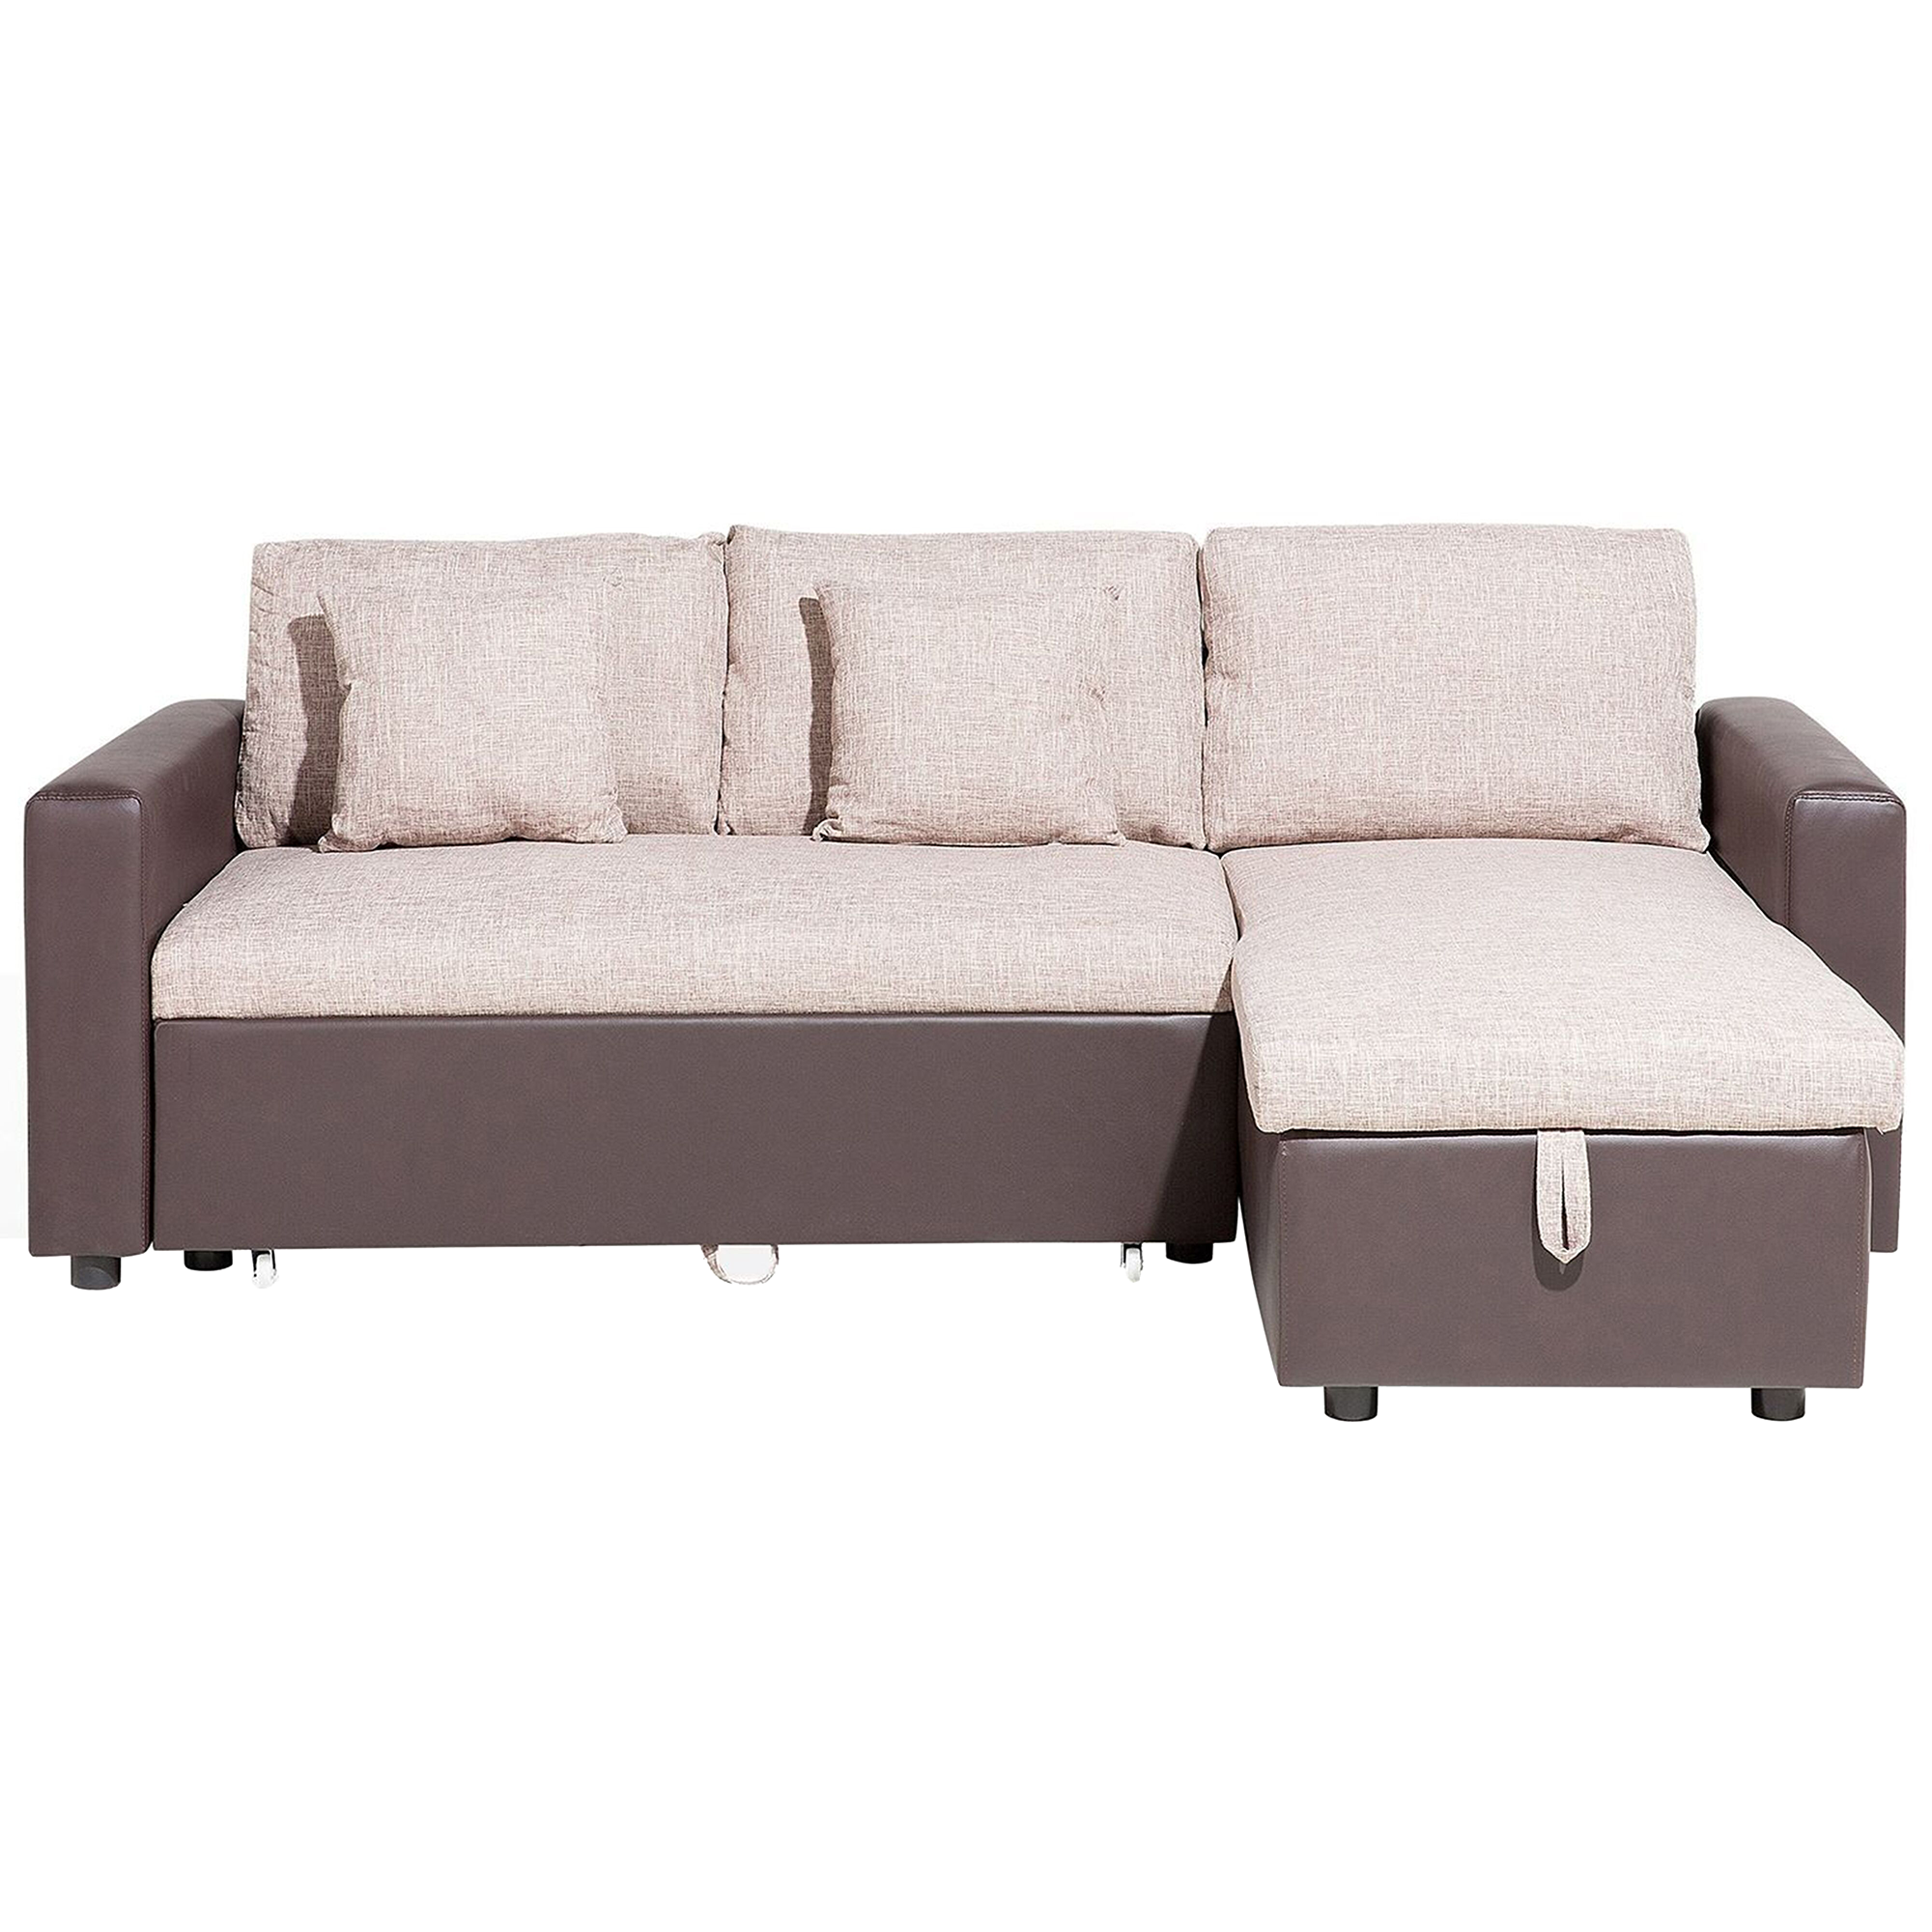 Beliani Corner Sofa Bed Black Grey Beige Fabric with Storage L-Shaped Left Hand Orientation Classic